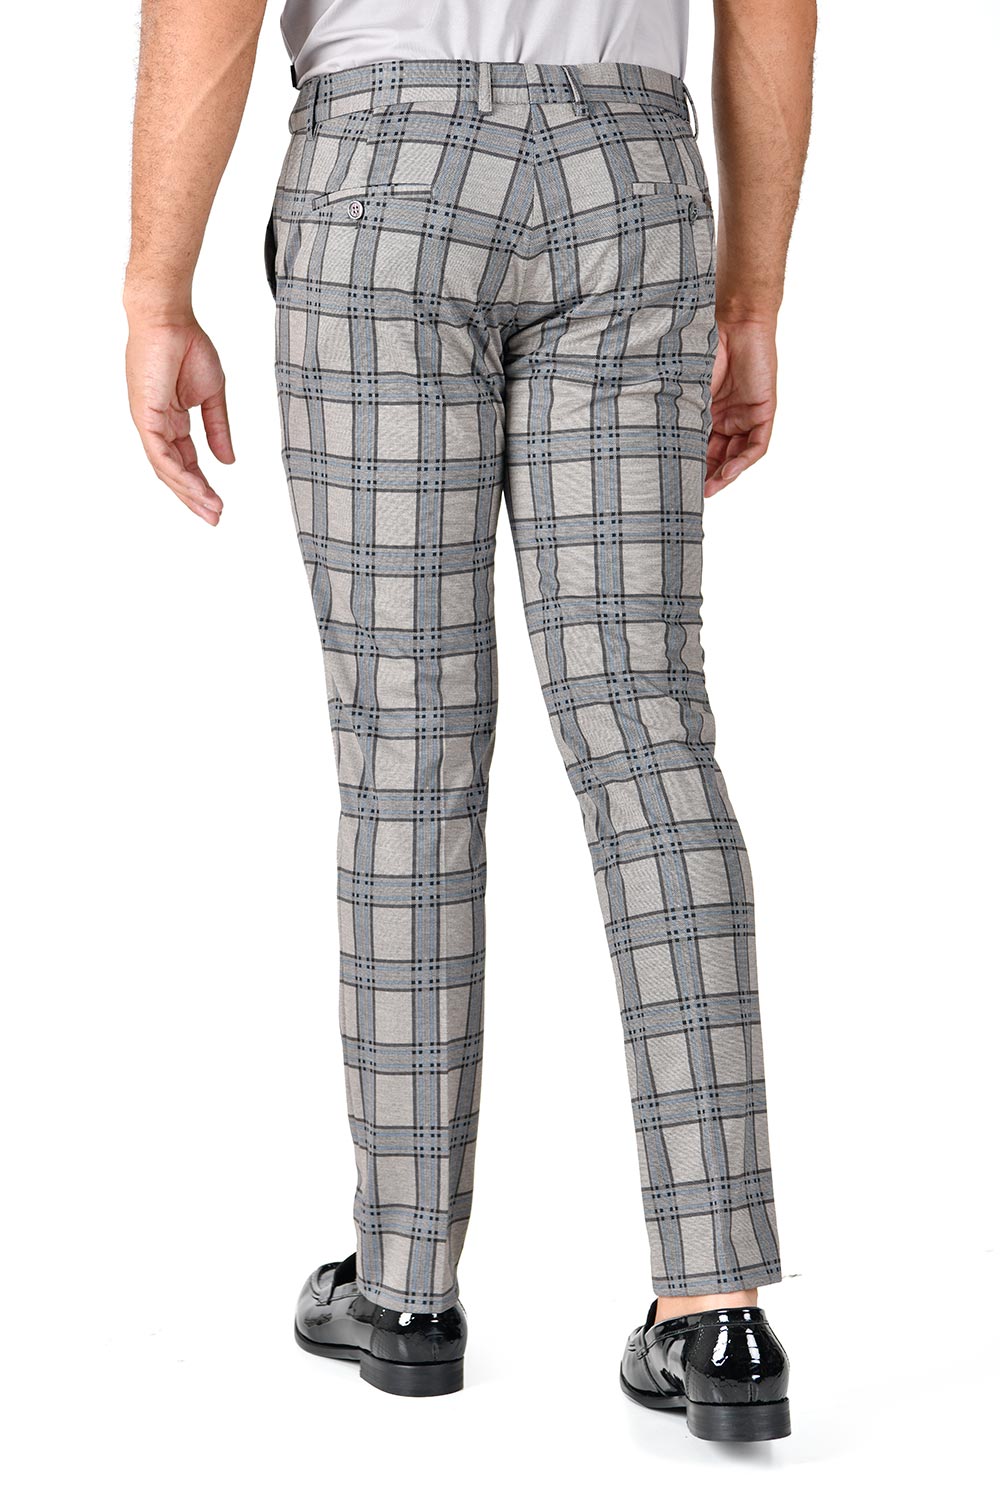 BARABAS men's checkered plaid light grey chino dress pants CP130 blue